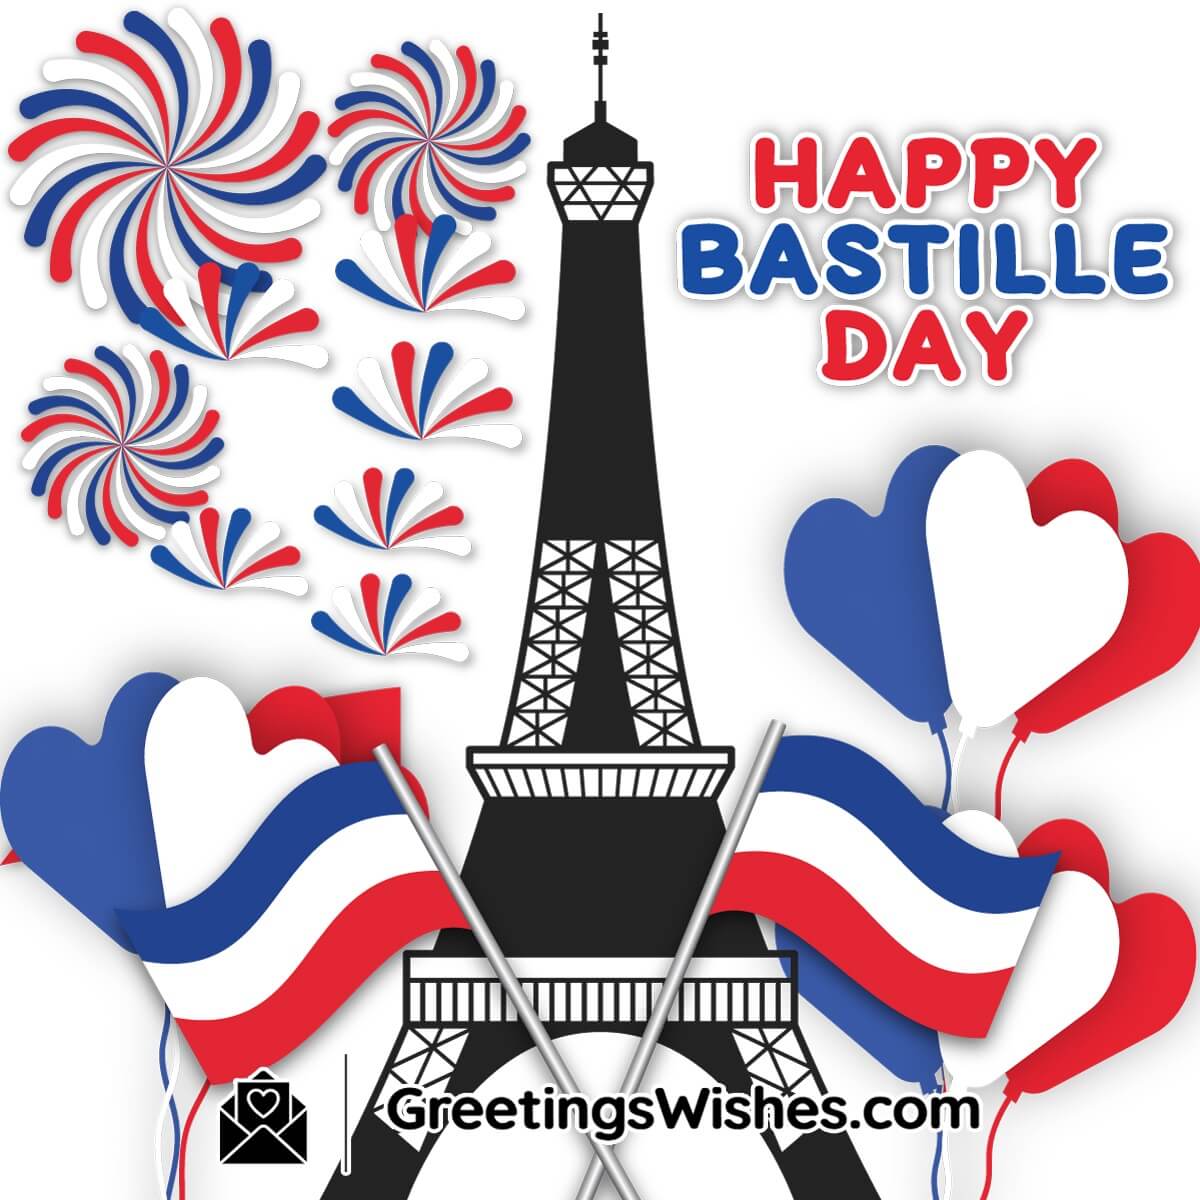 Happy Bastille Day Image